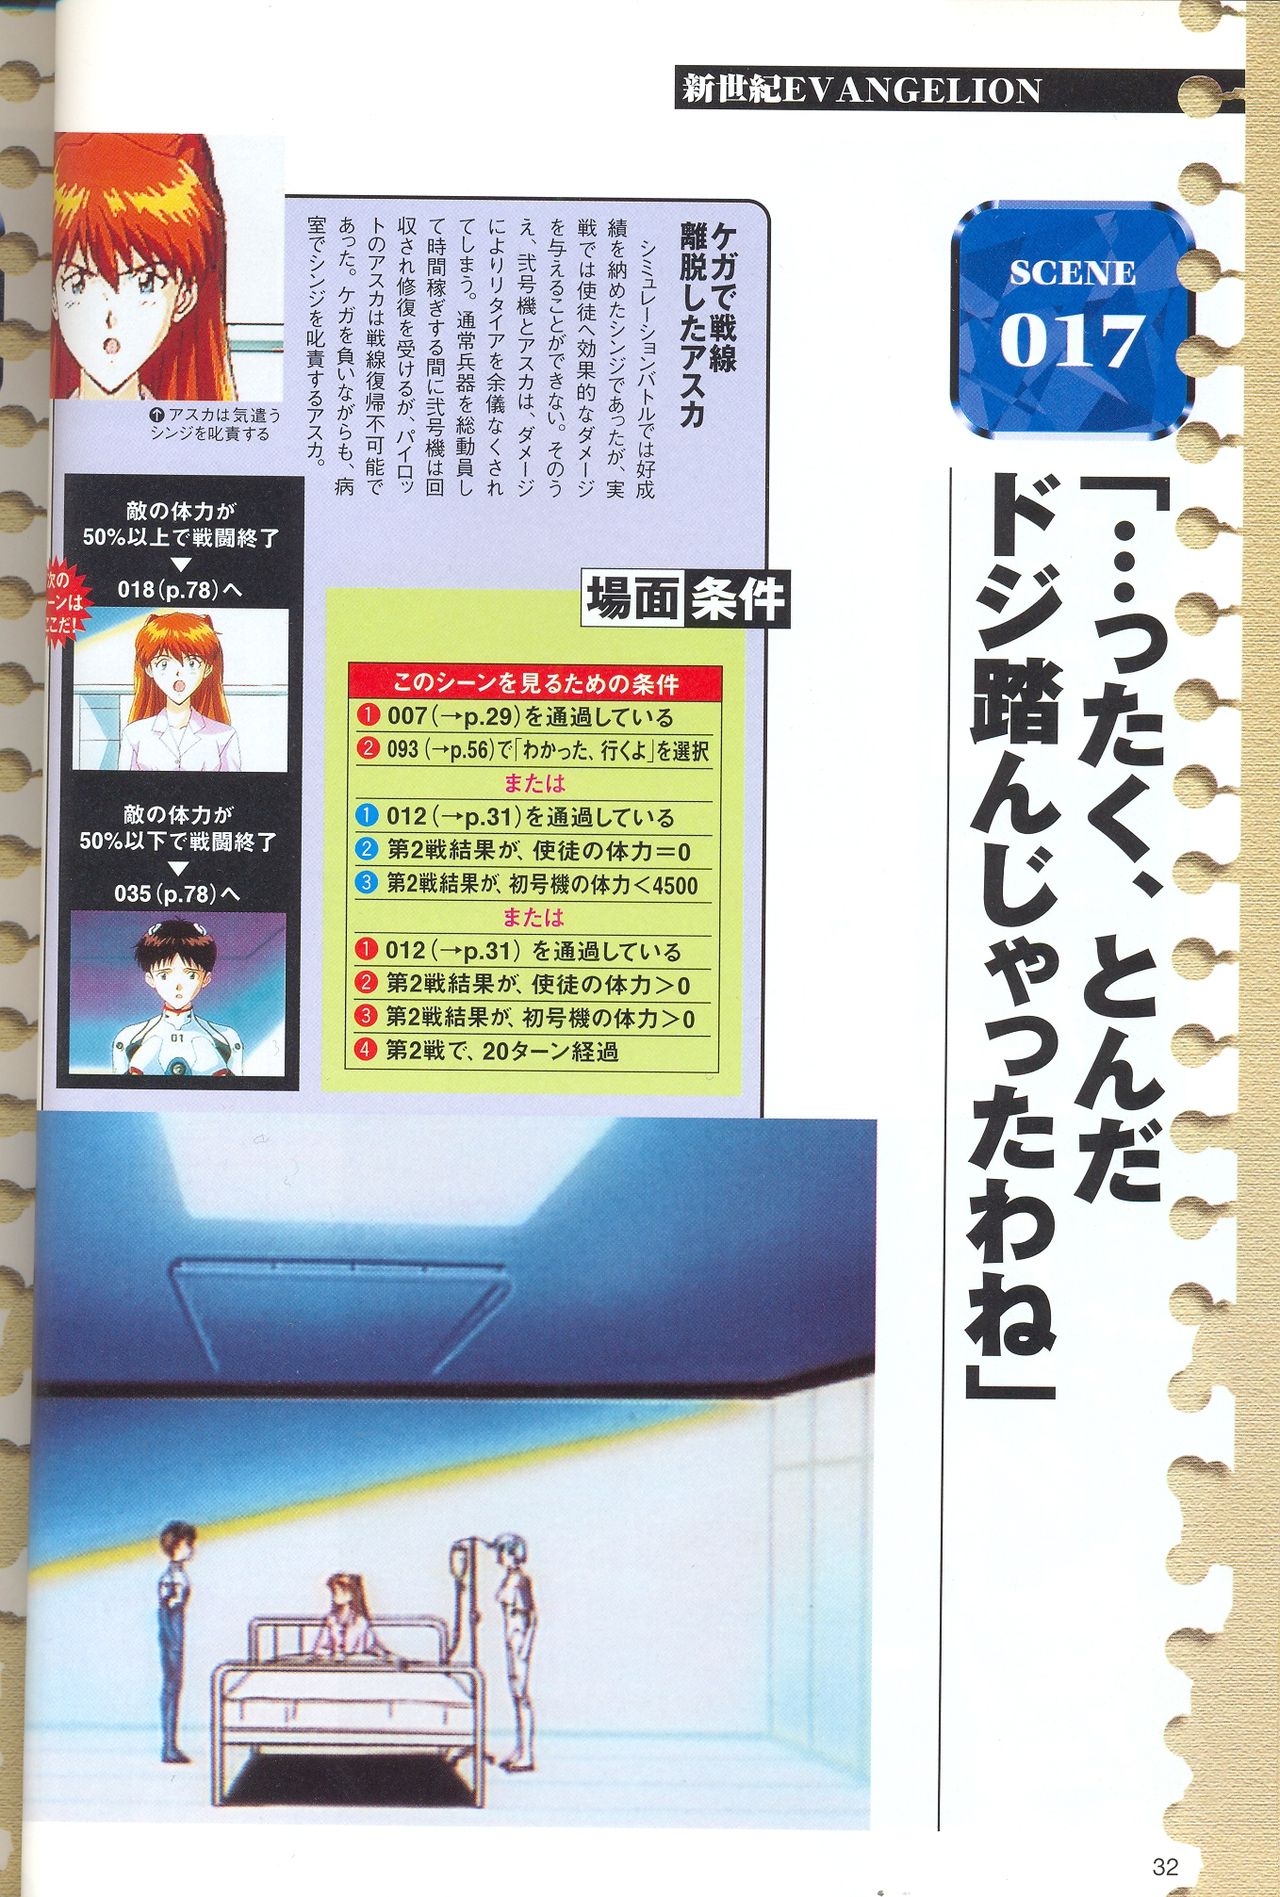 Neon Genesis Evangelion - 2nd Impression Sega Saturn Perfect Guide 31